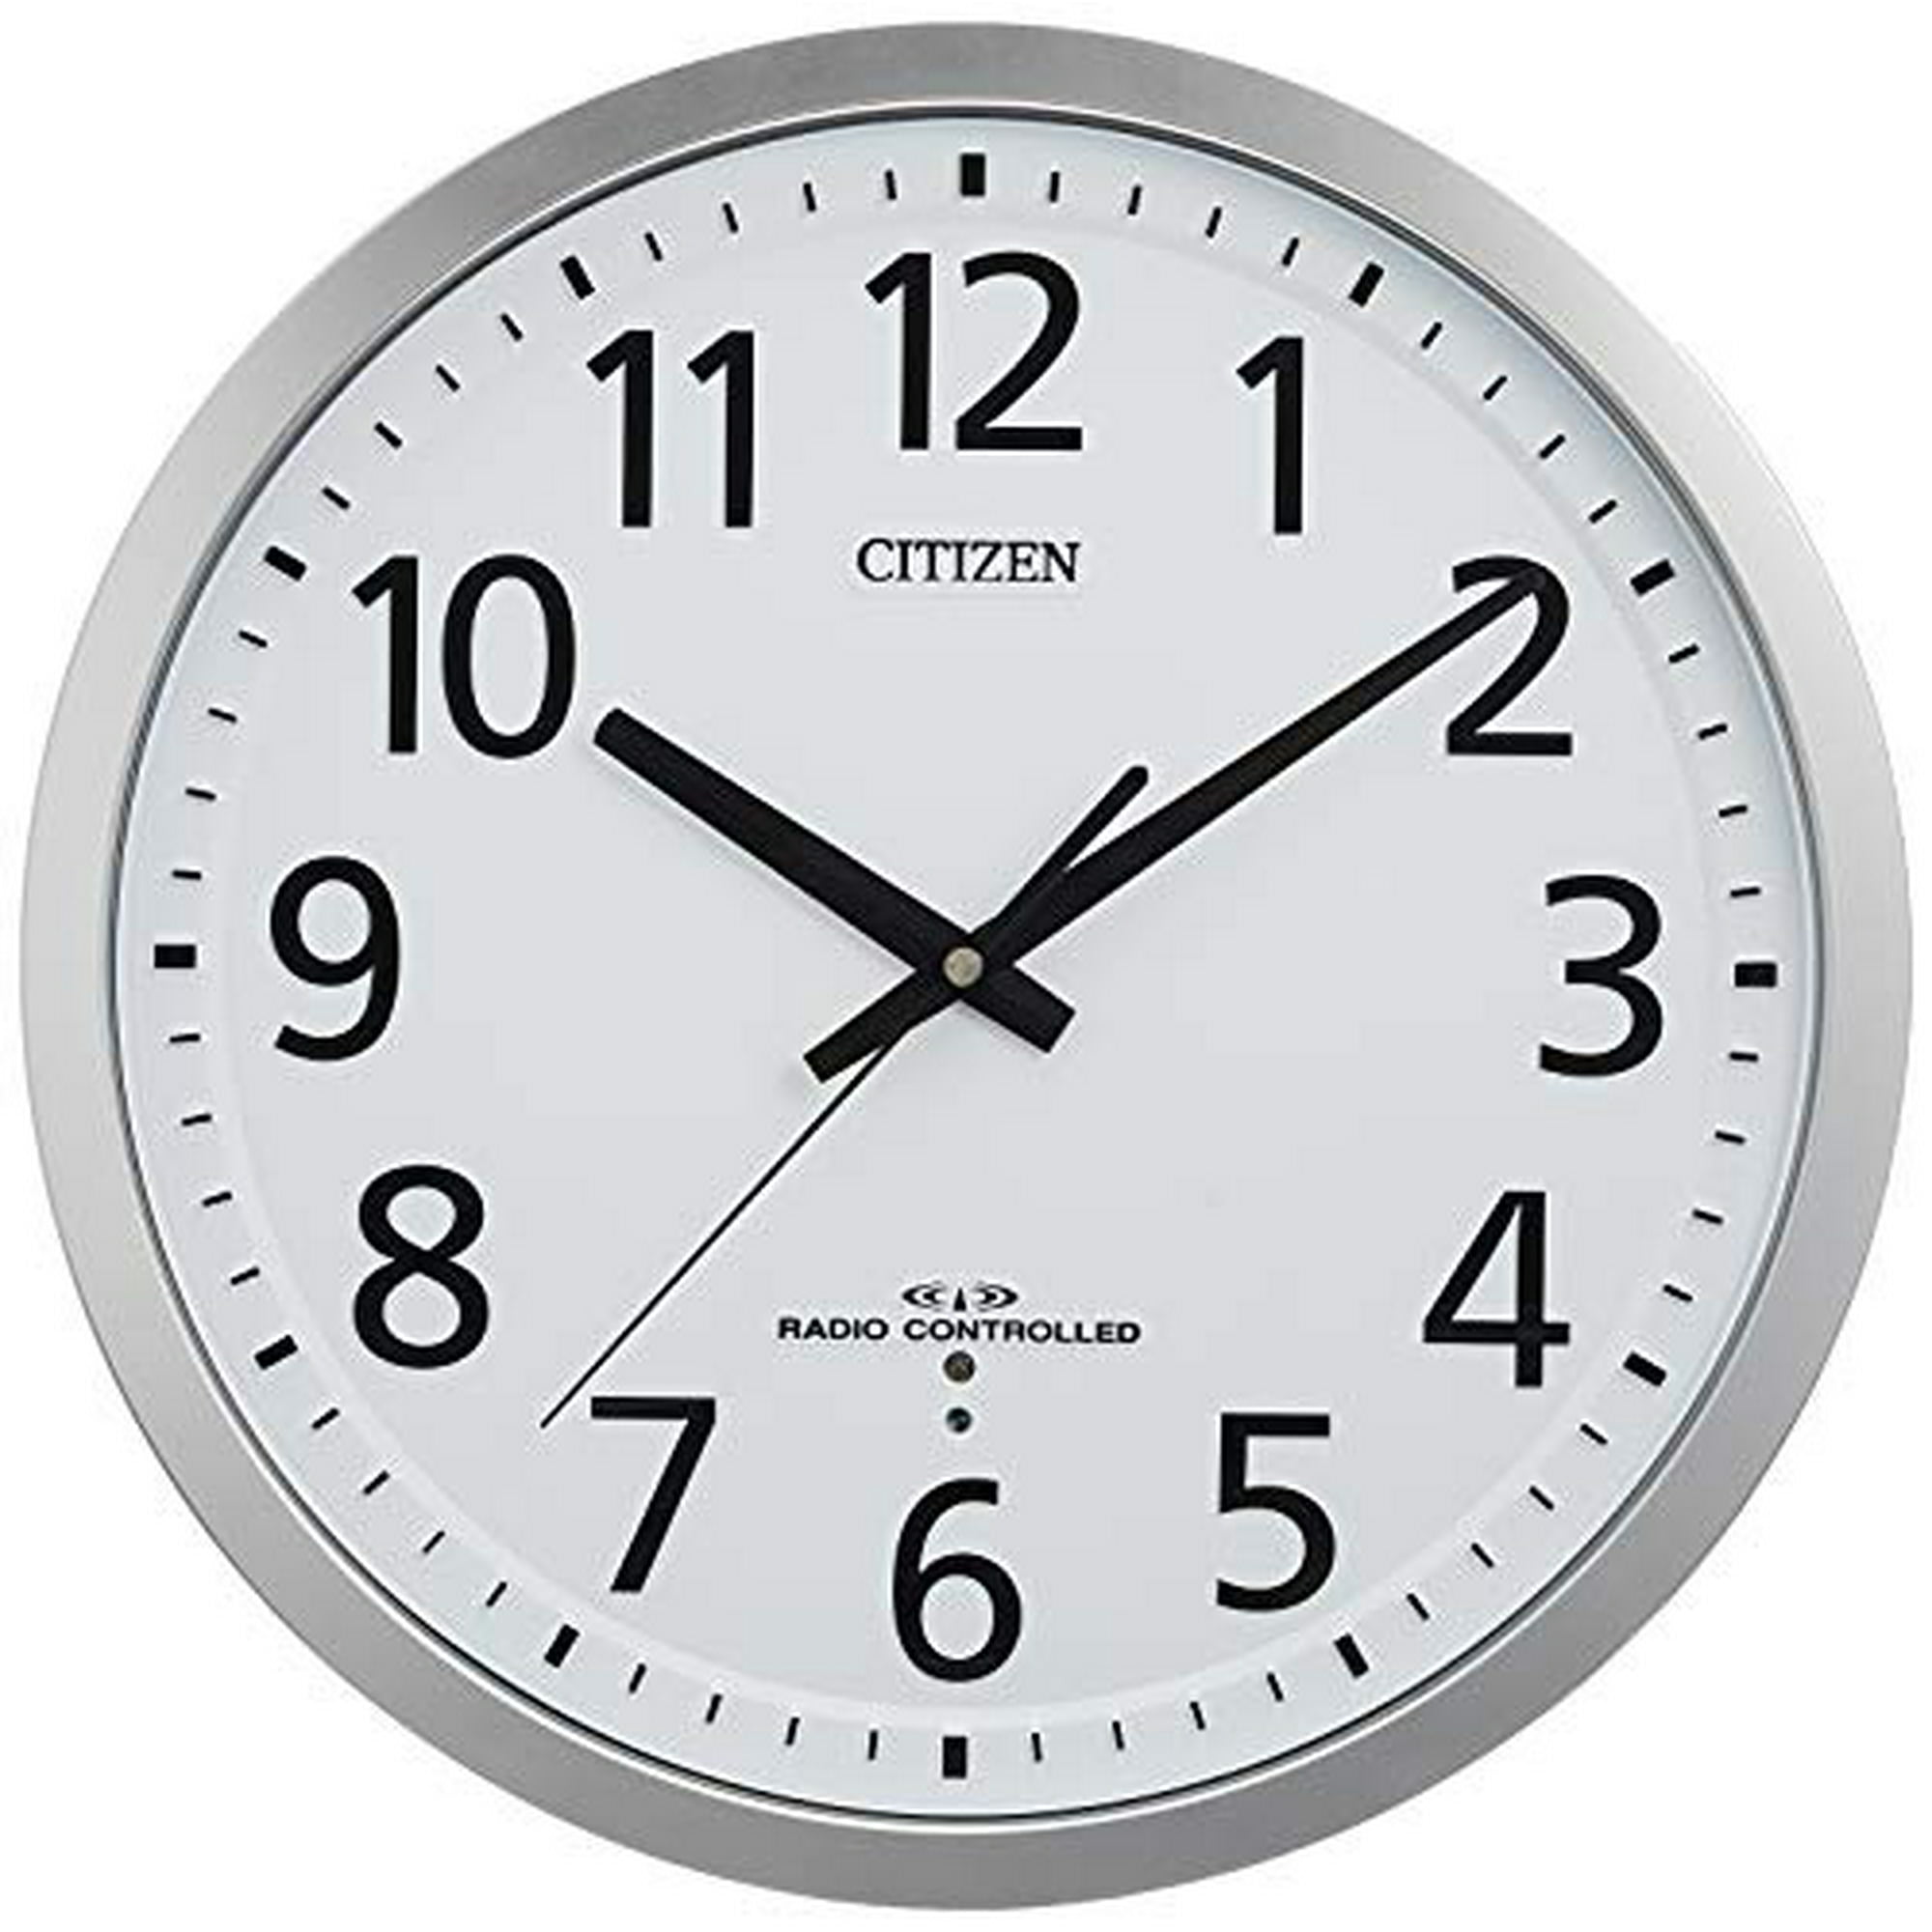 Citizen Citizen Wall Clock Radio Clock Spacy M462 8MY462-019